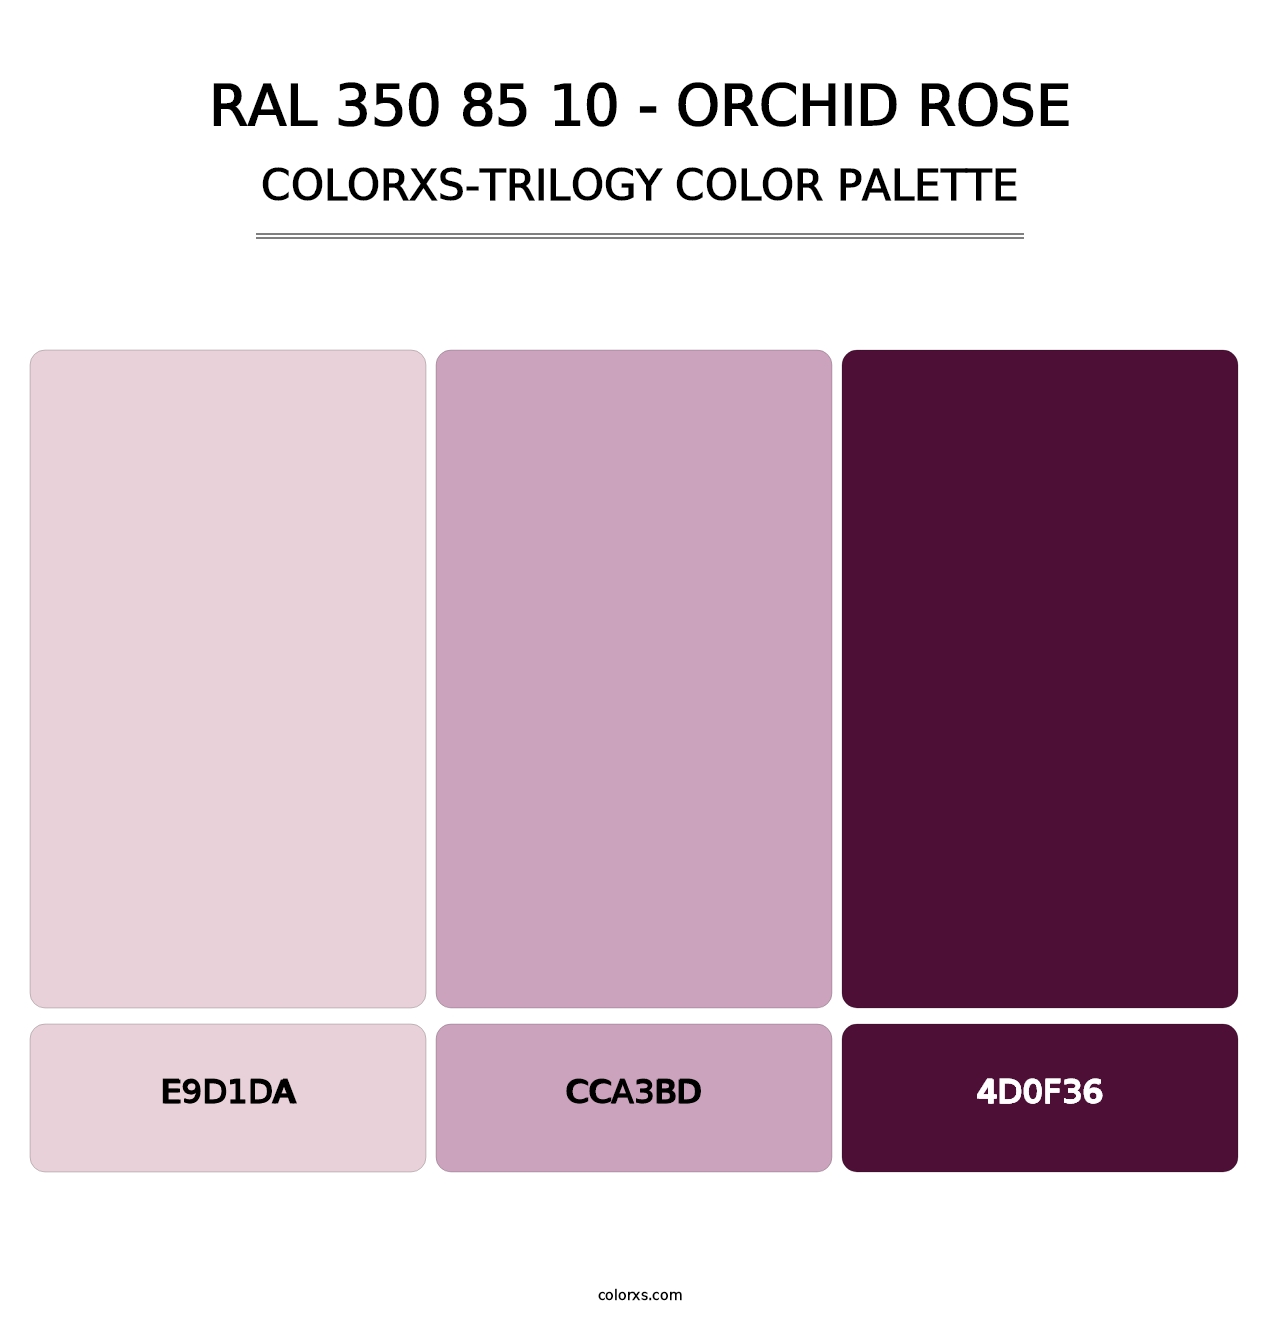 RAL 350 85 10 - Orchid Rose - Colorxs Trilogy Palette